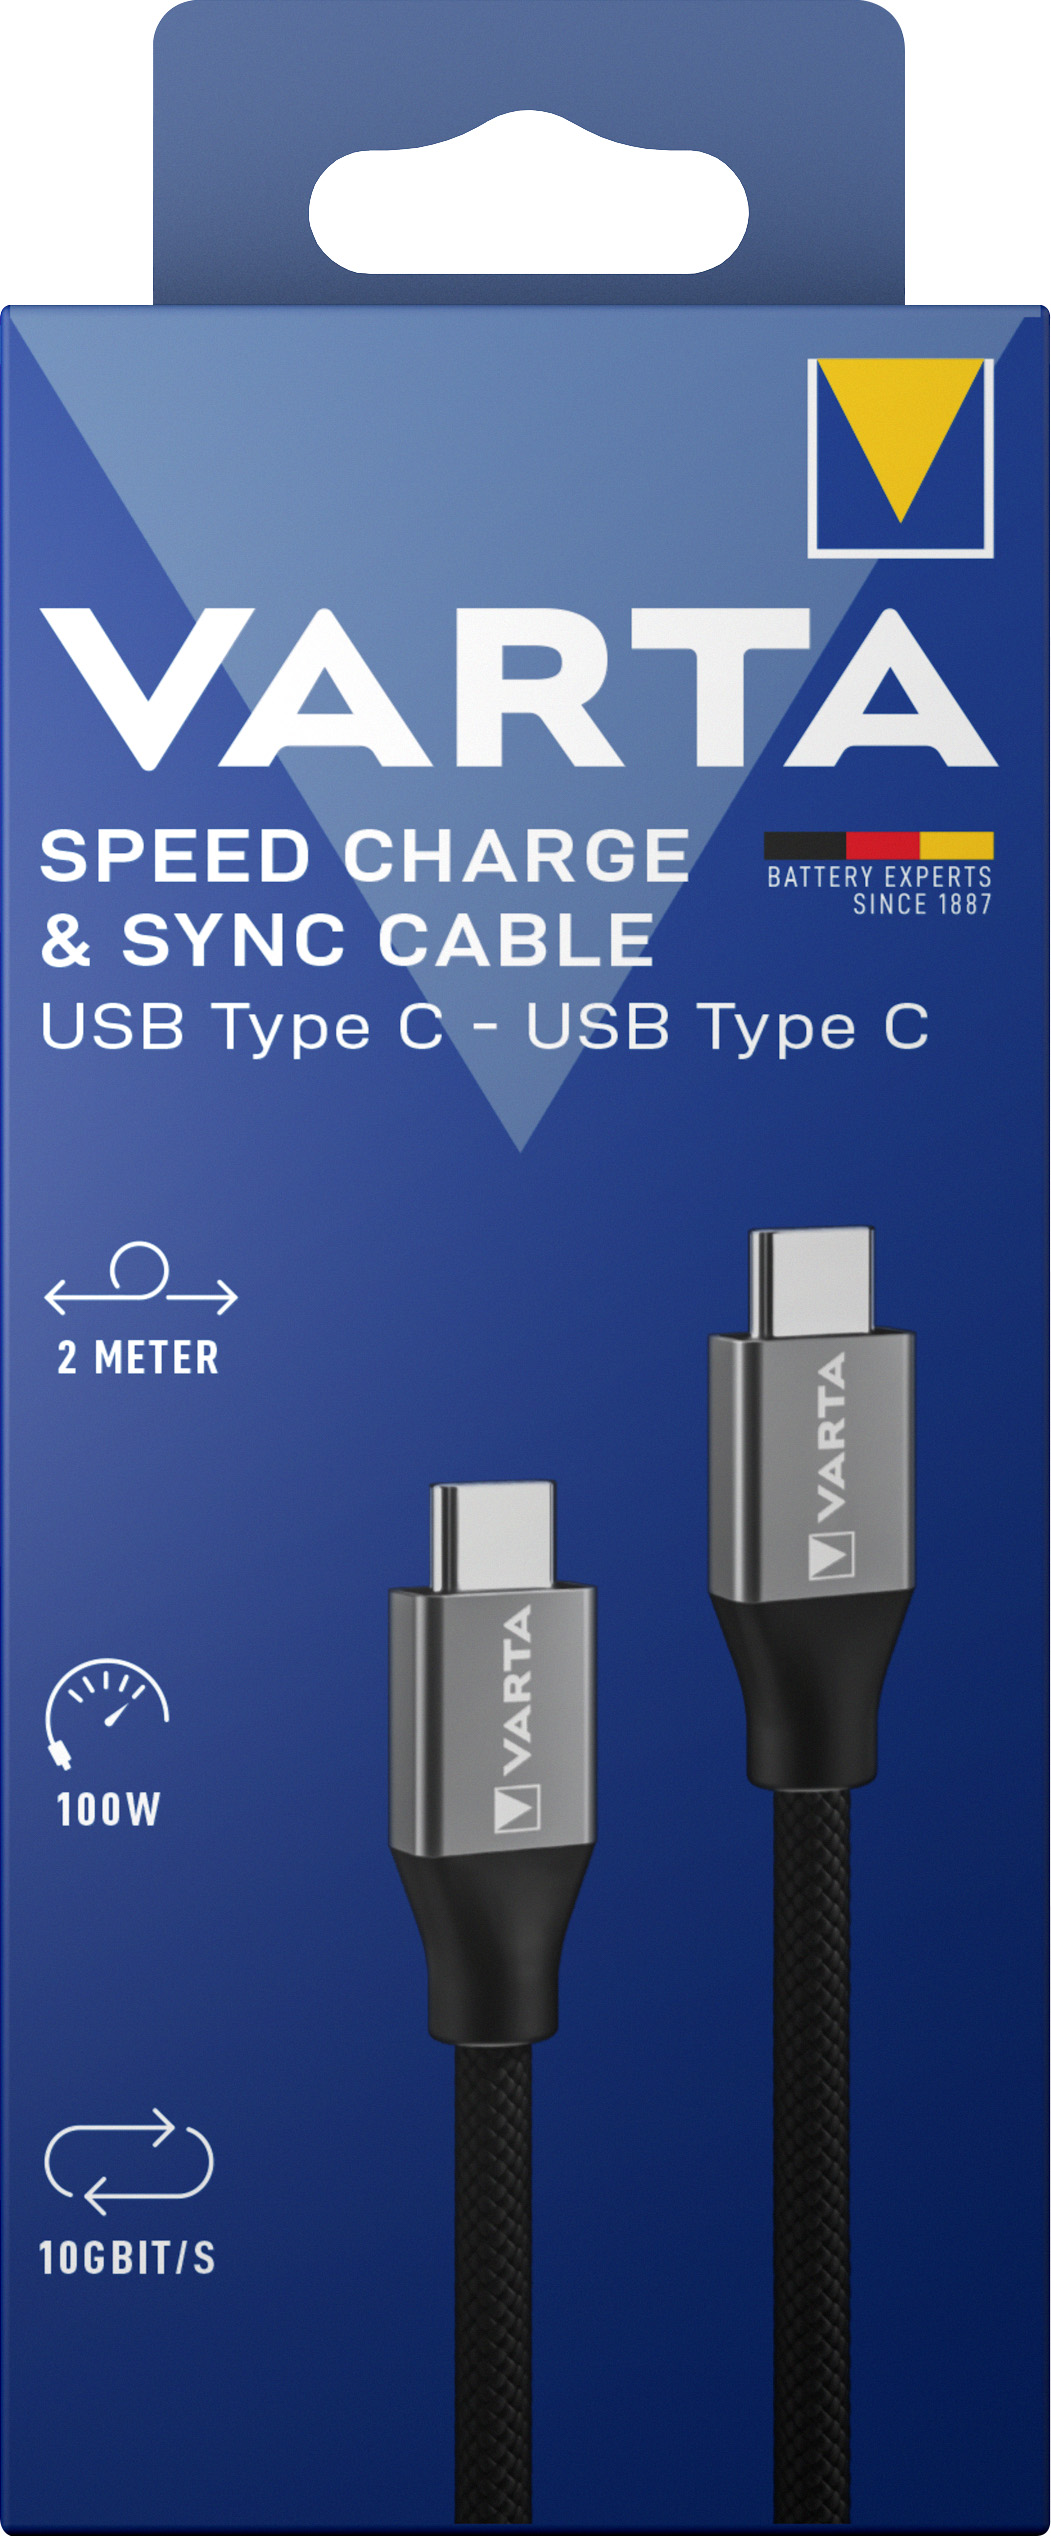 Varta Kabel, USB-C/USB-C, 2.0m 100W, 10Gbit/s, schwarz, Retail-Blister